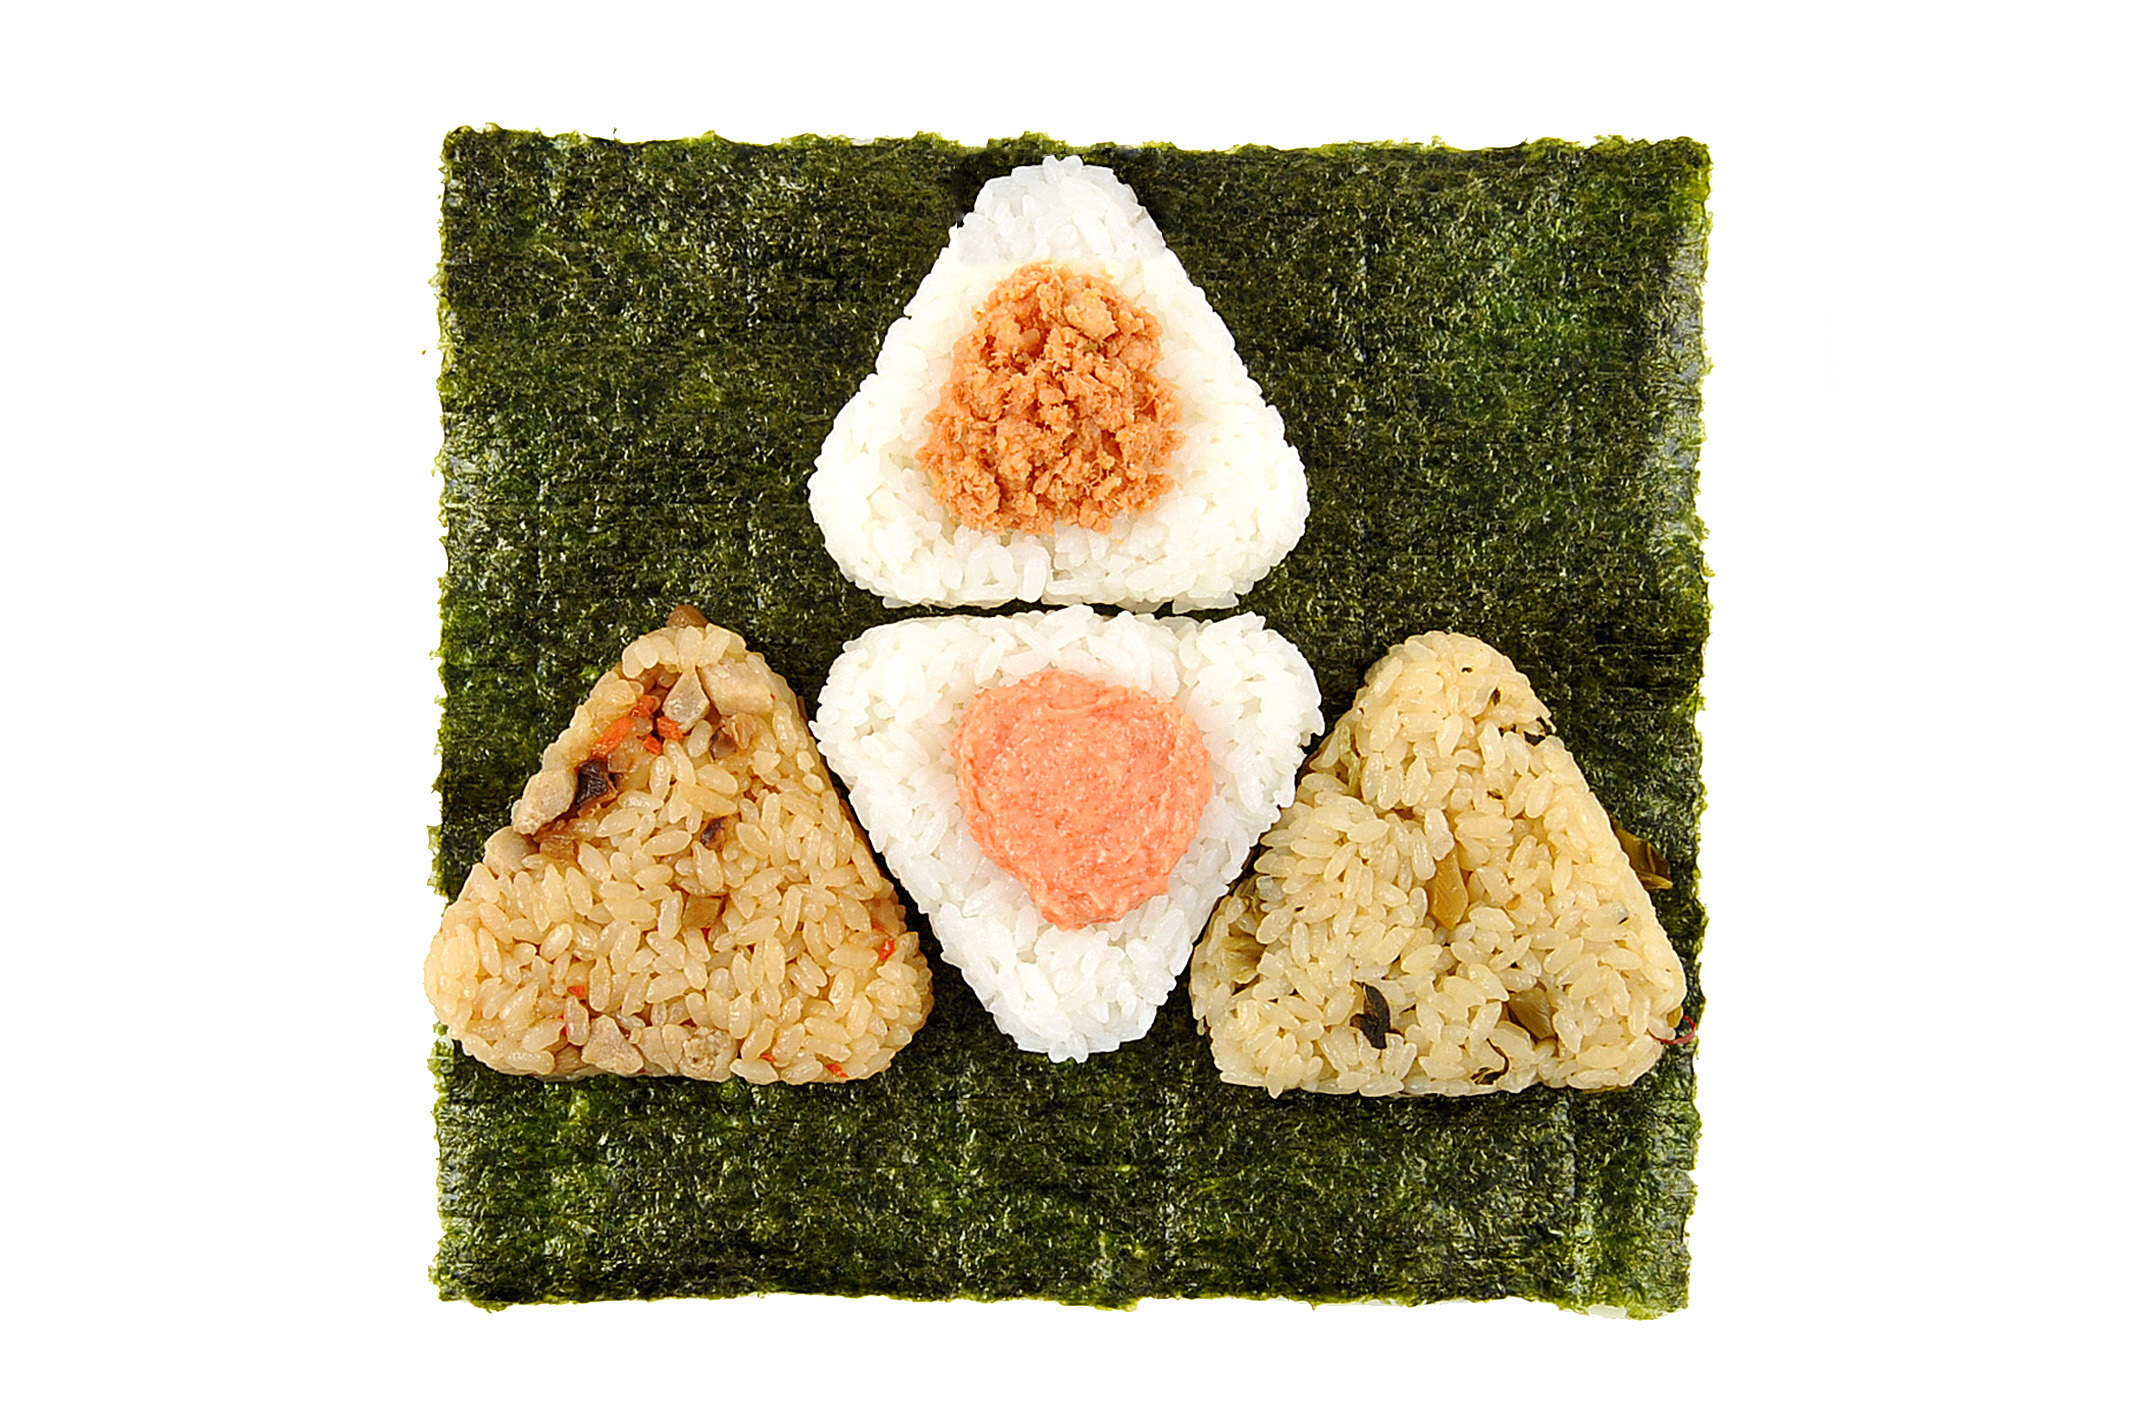 Onigiri 🍙 #demonslayer #food #anime #cooking #delicious #japanesefood # onigiri #shorts 